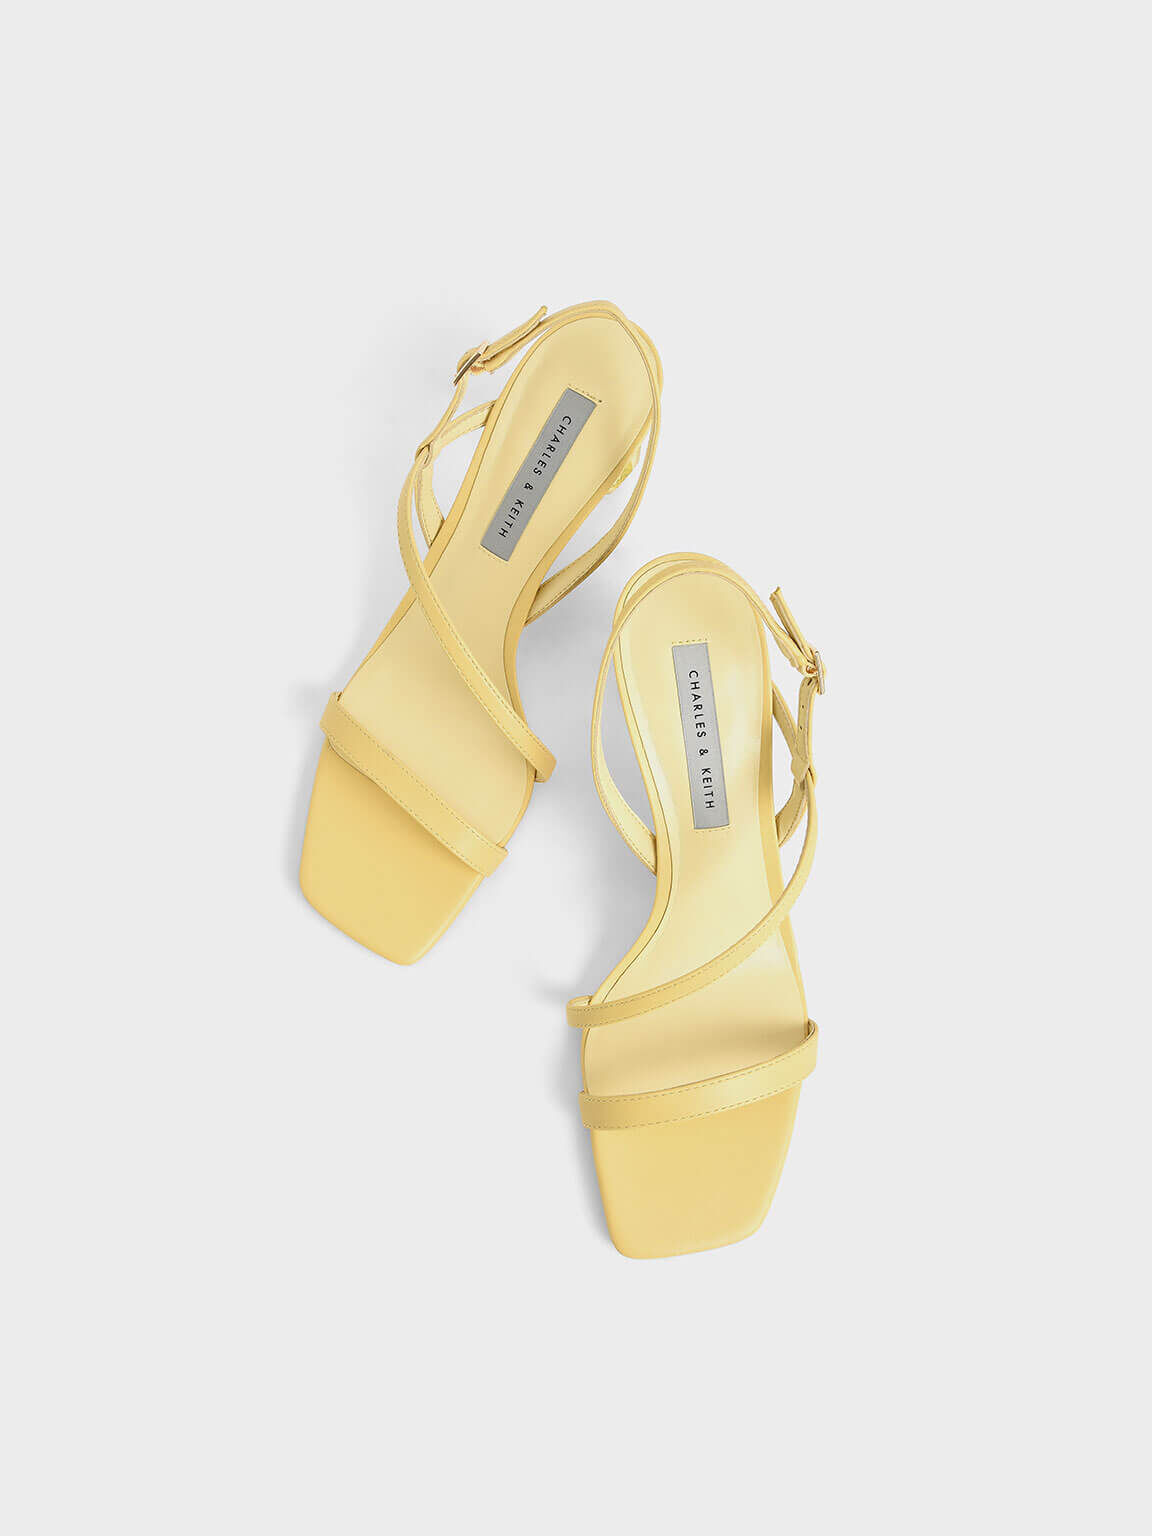 See-Through Sculptural Heel Sandals, Yellow, hi-res